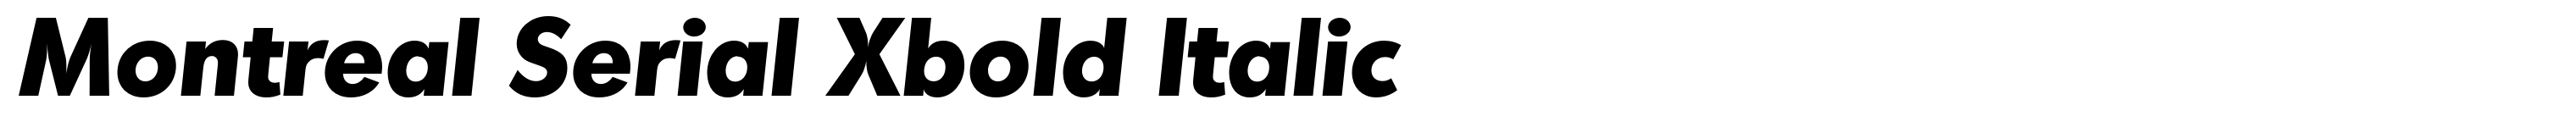 Montreal Serial Xbold Italic